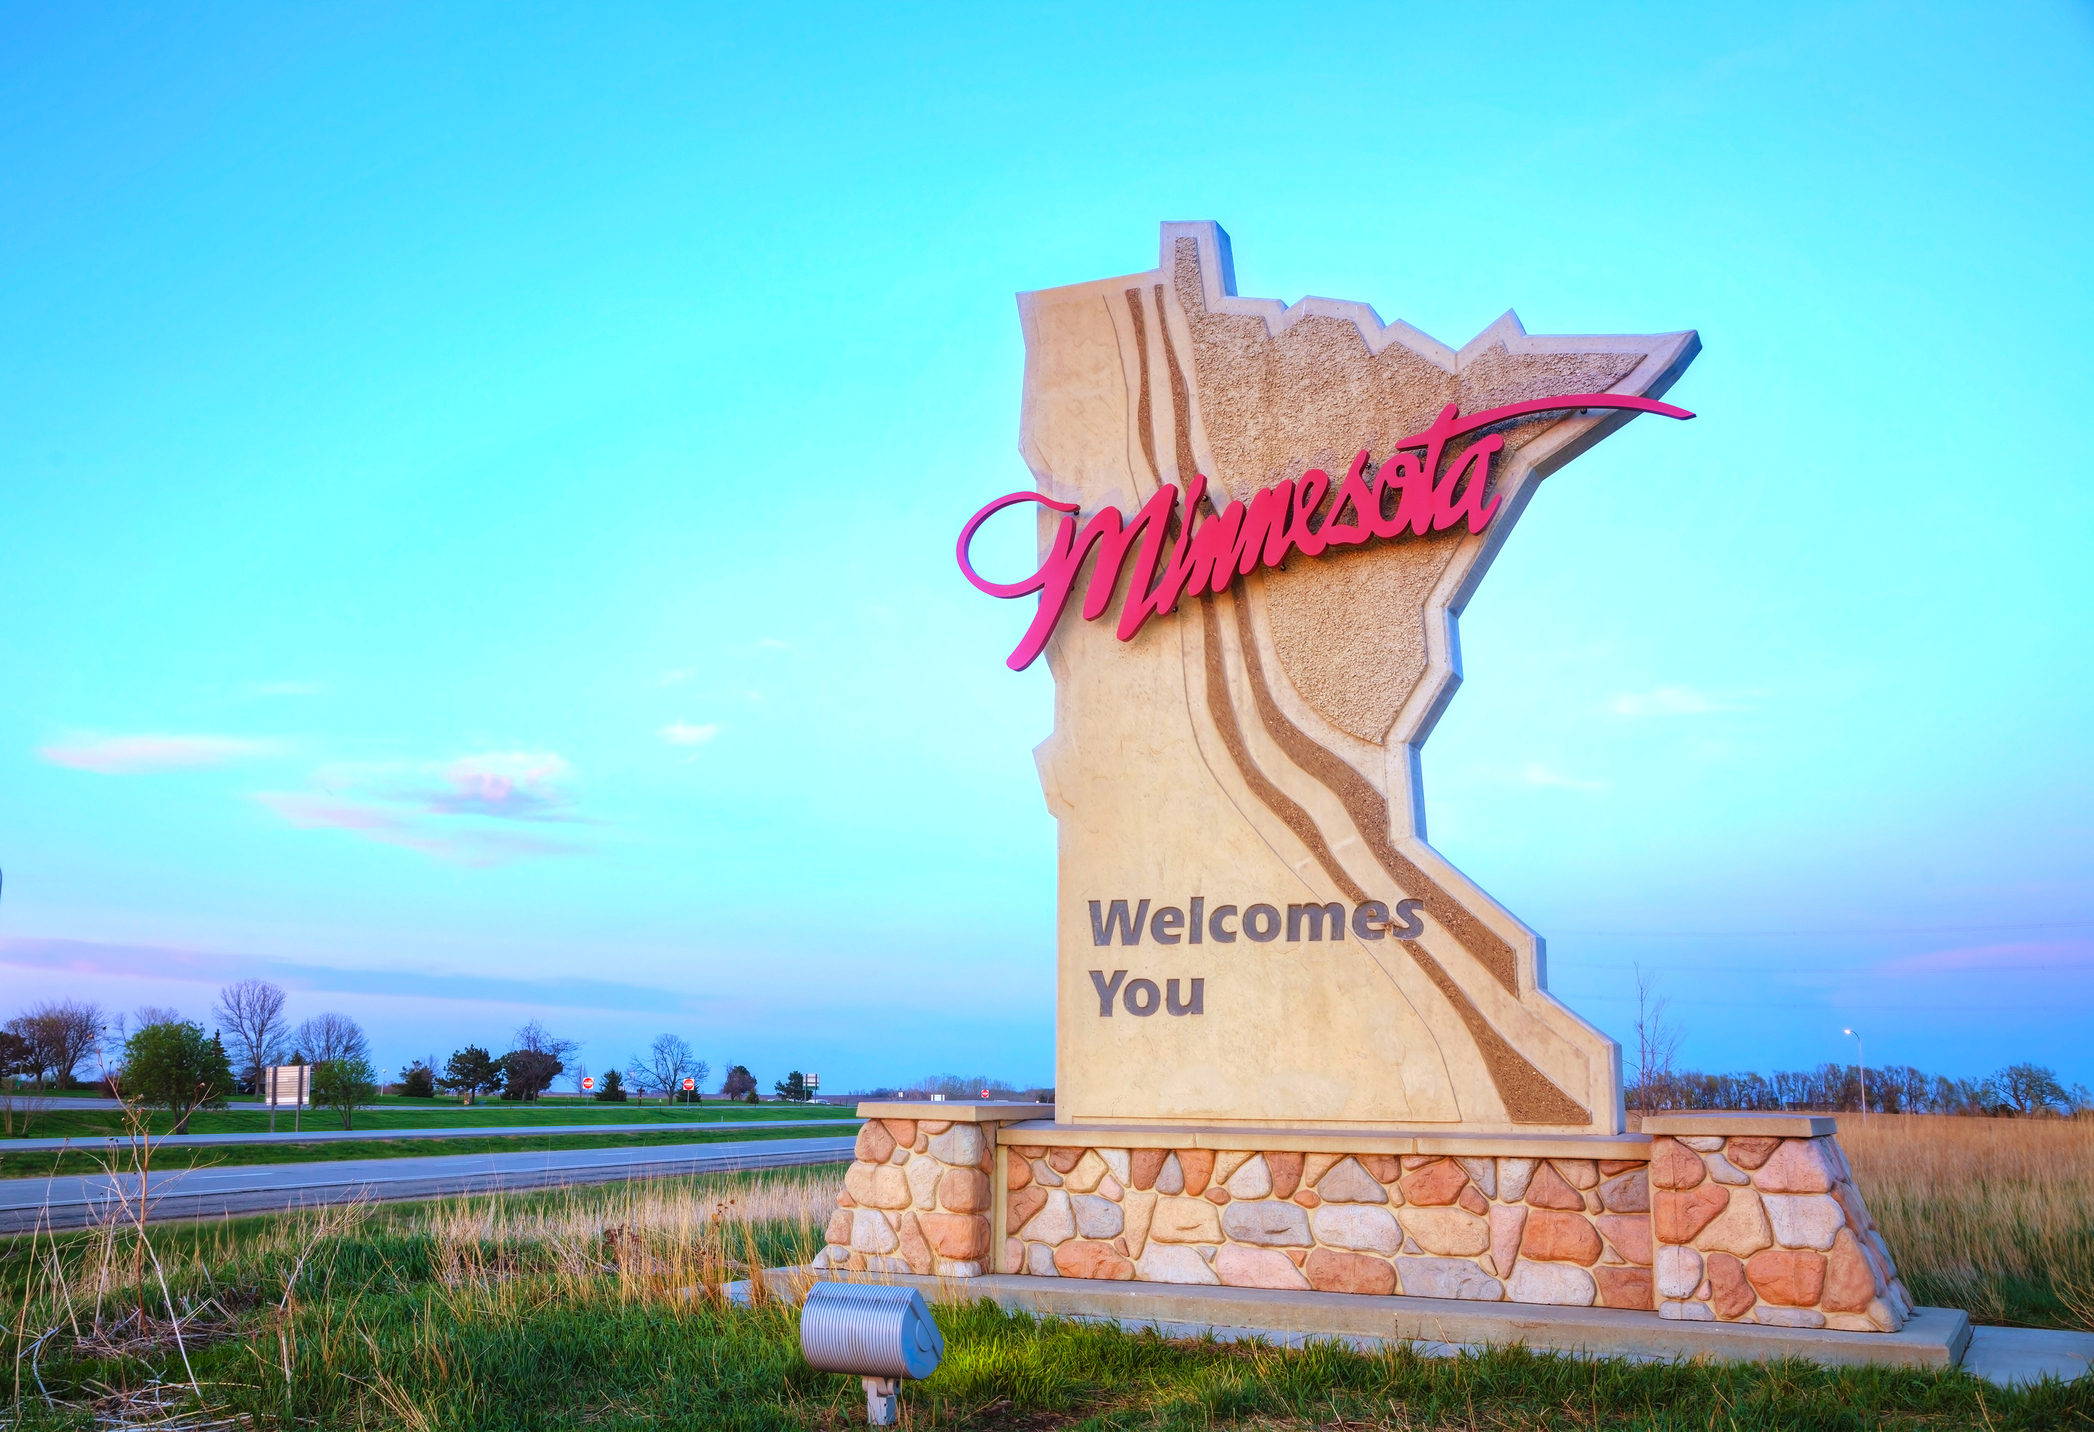 Little Known Travel Destinations in Minnesota